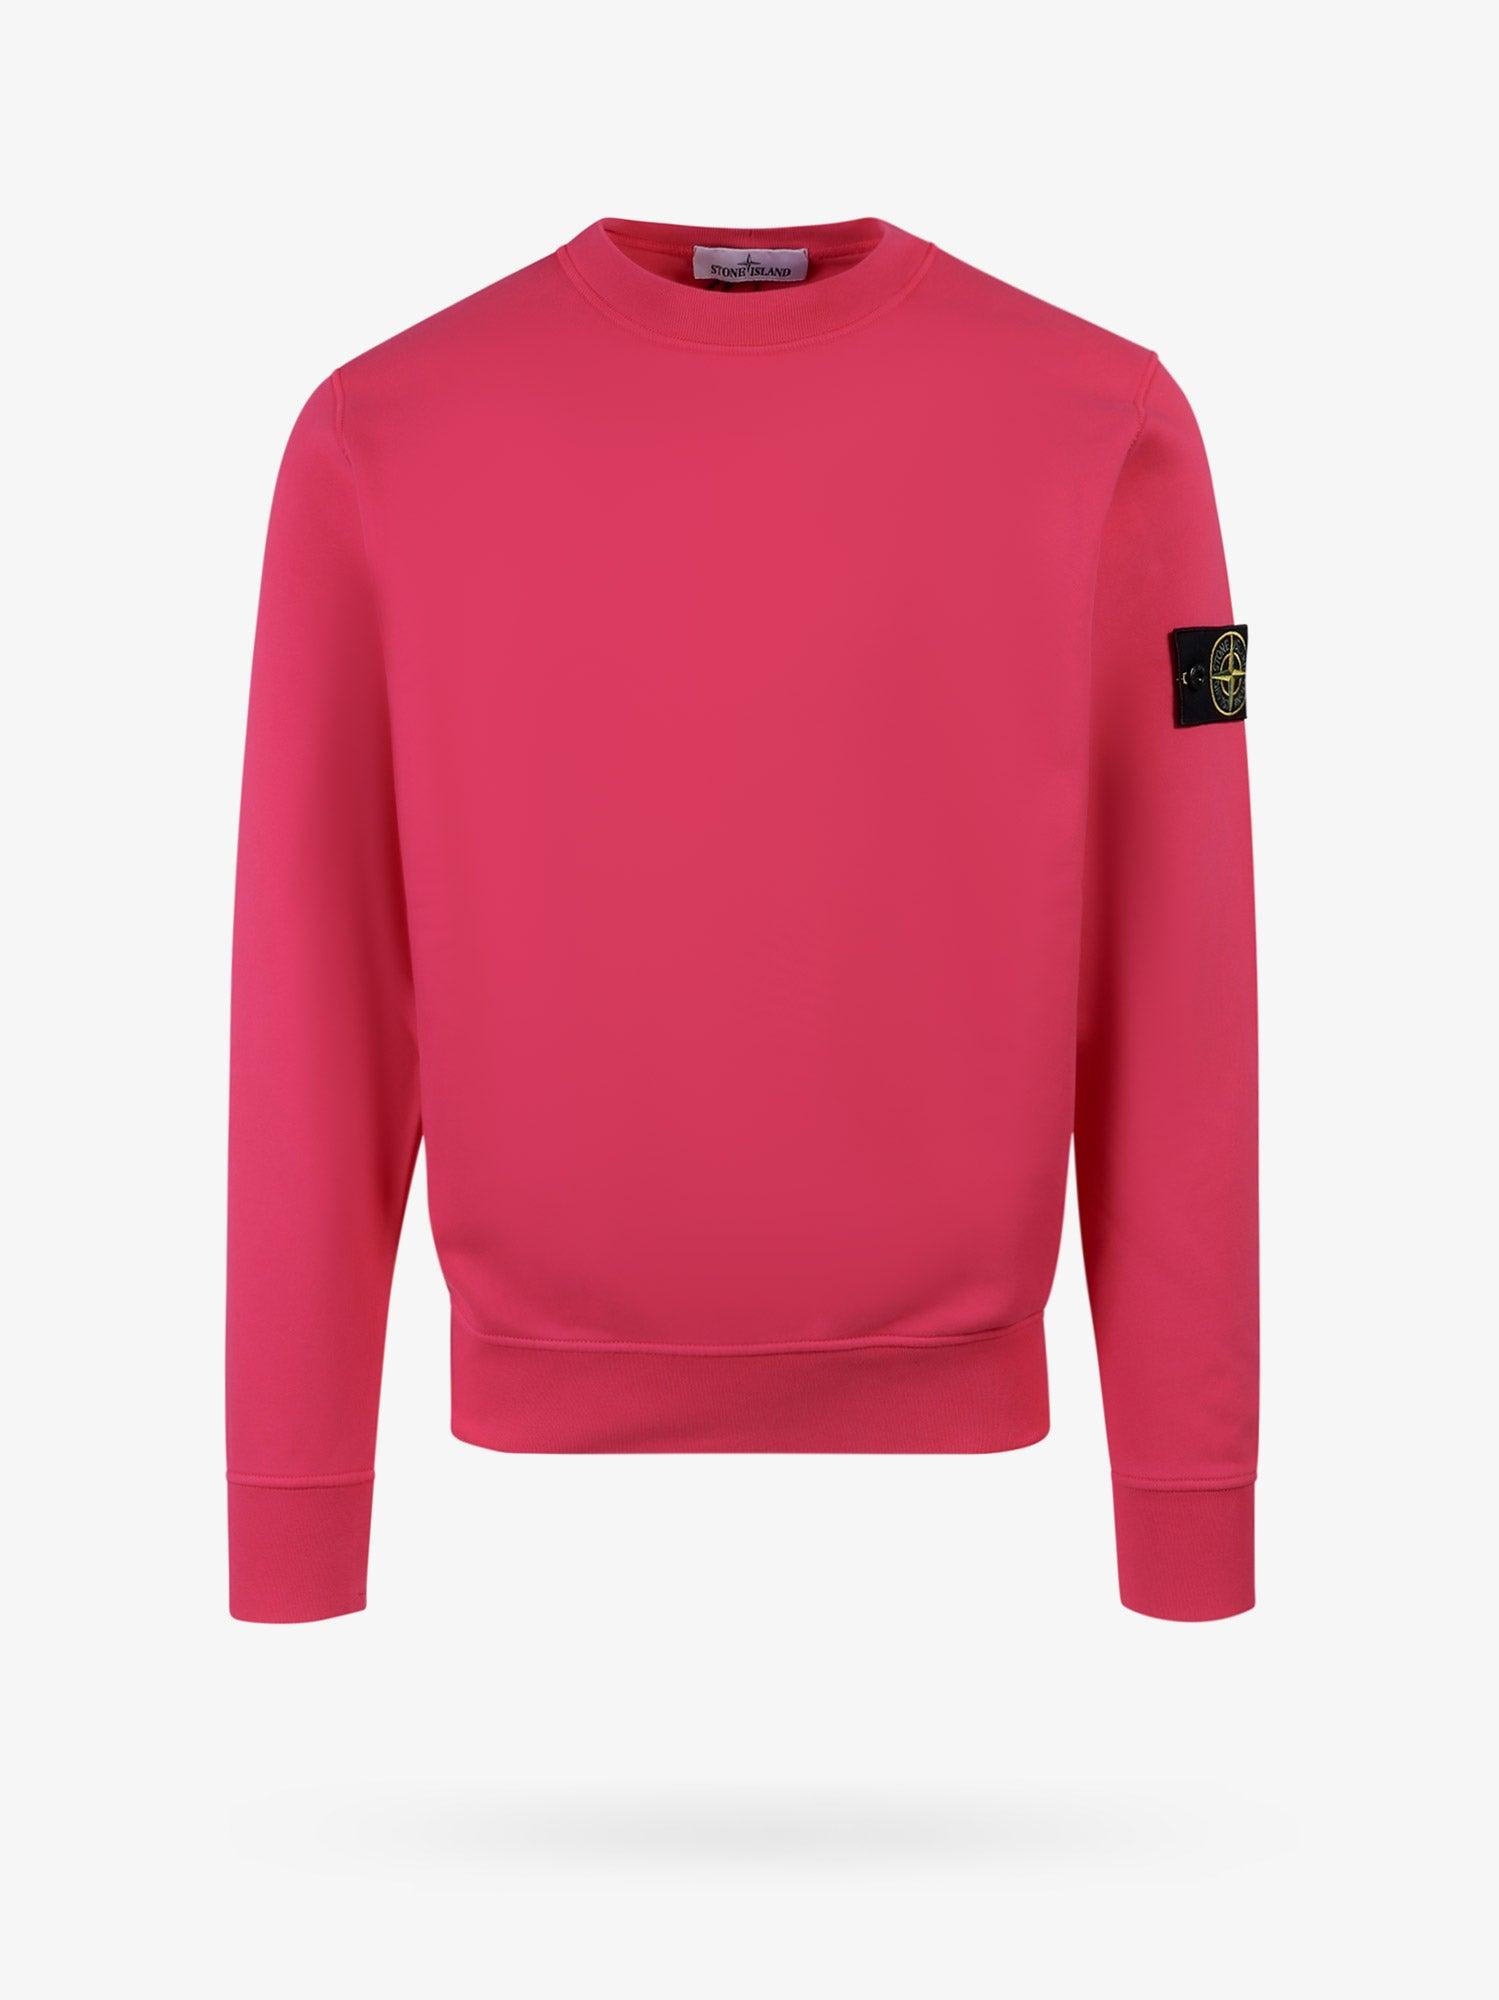 Stone Island Cotton Sweatshirt in Pink for Men - Lyst